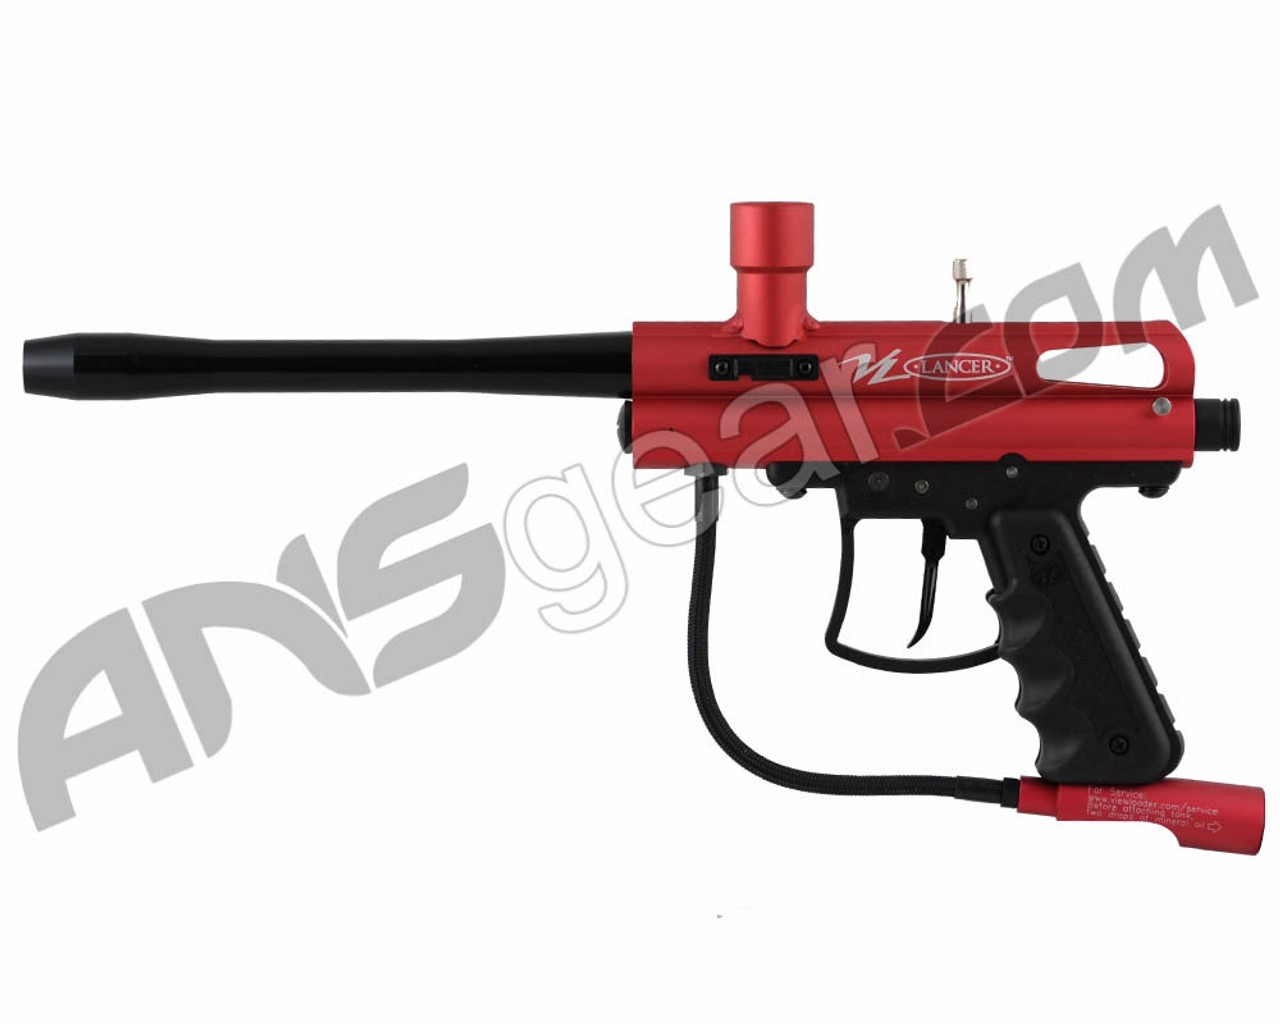 Viewloader Lancer Semi-Auto Paintball Gun - Red - ANSgear.com